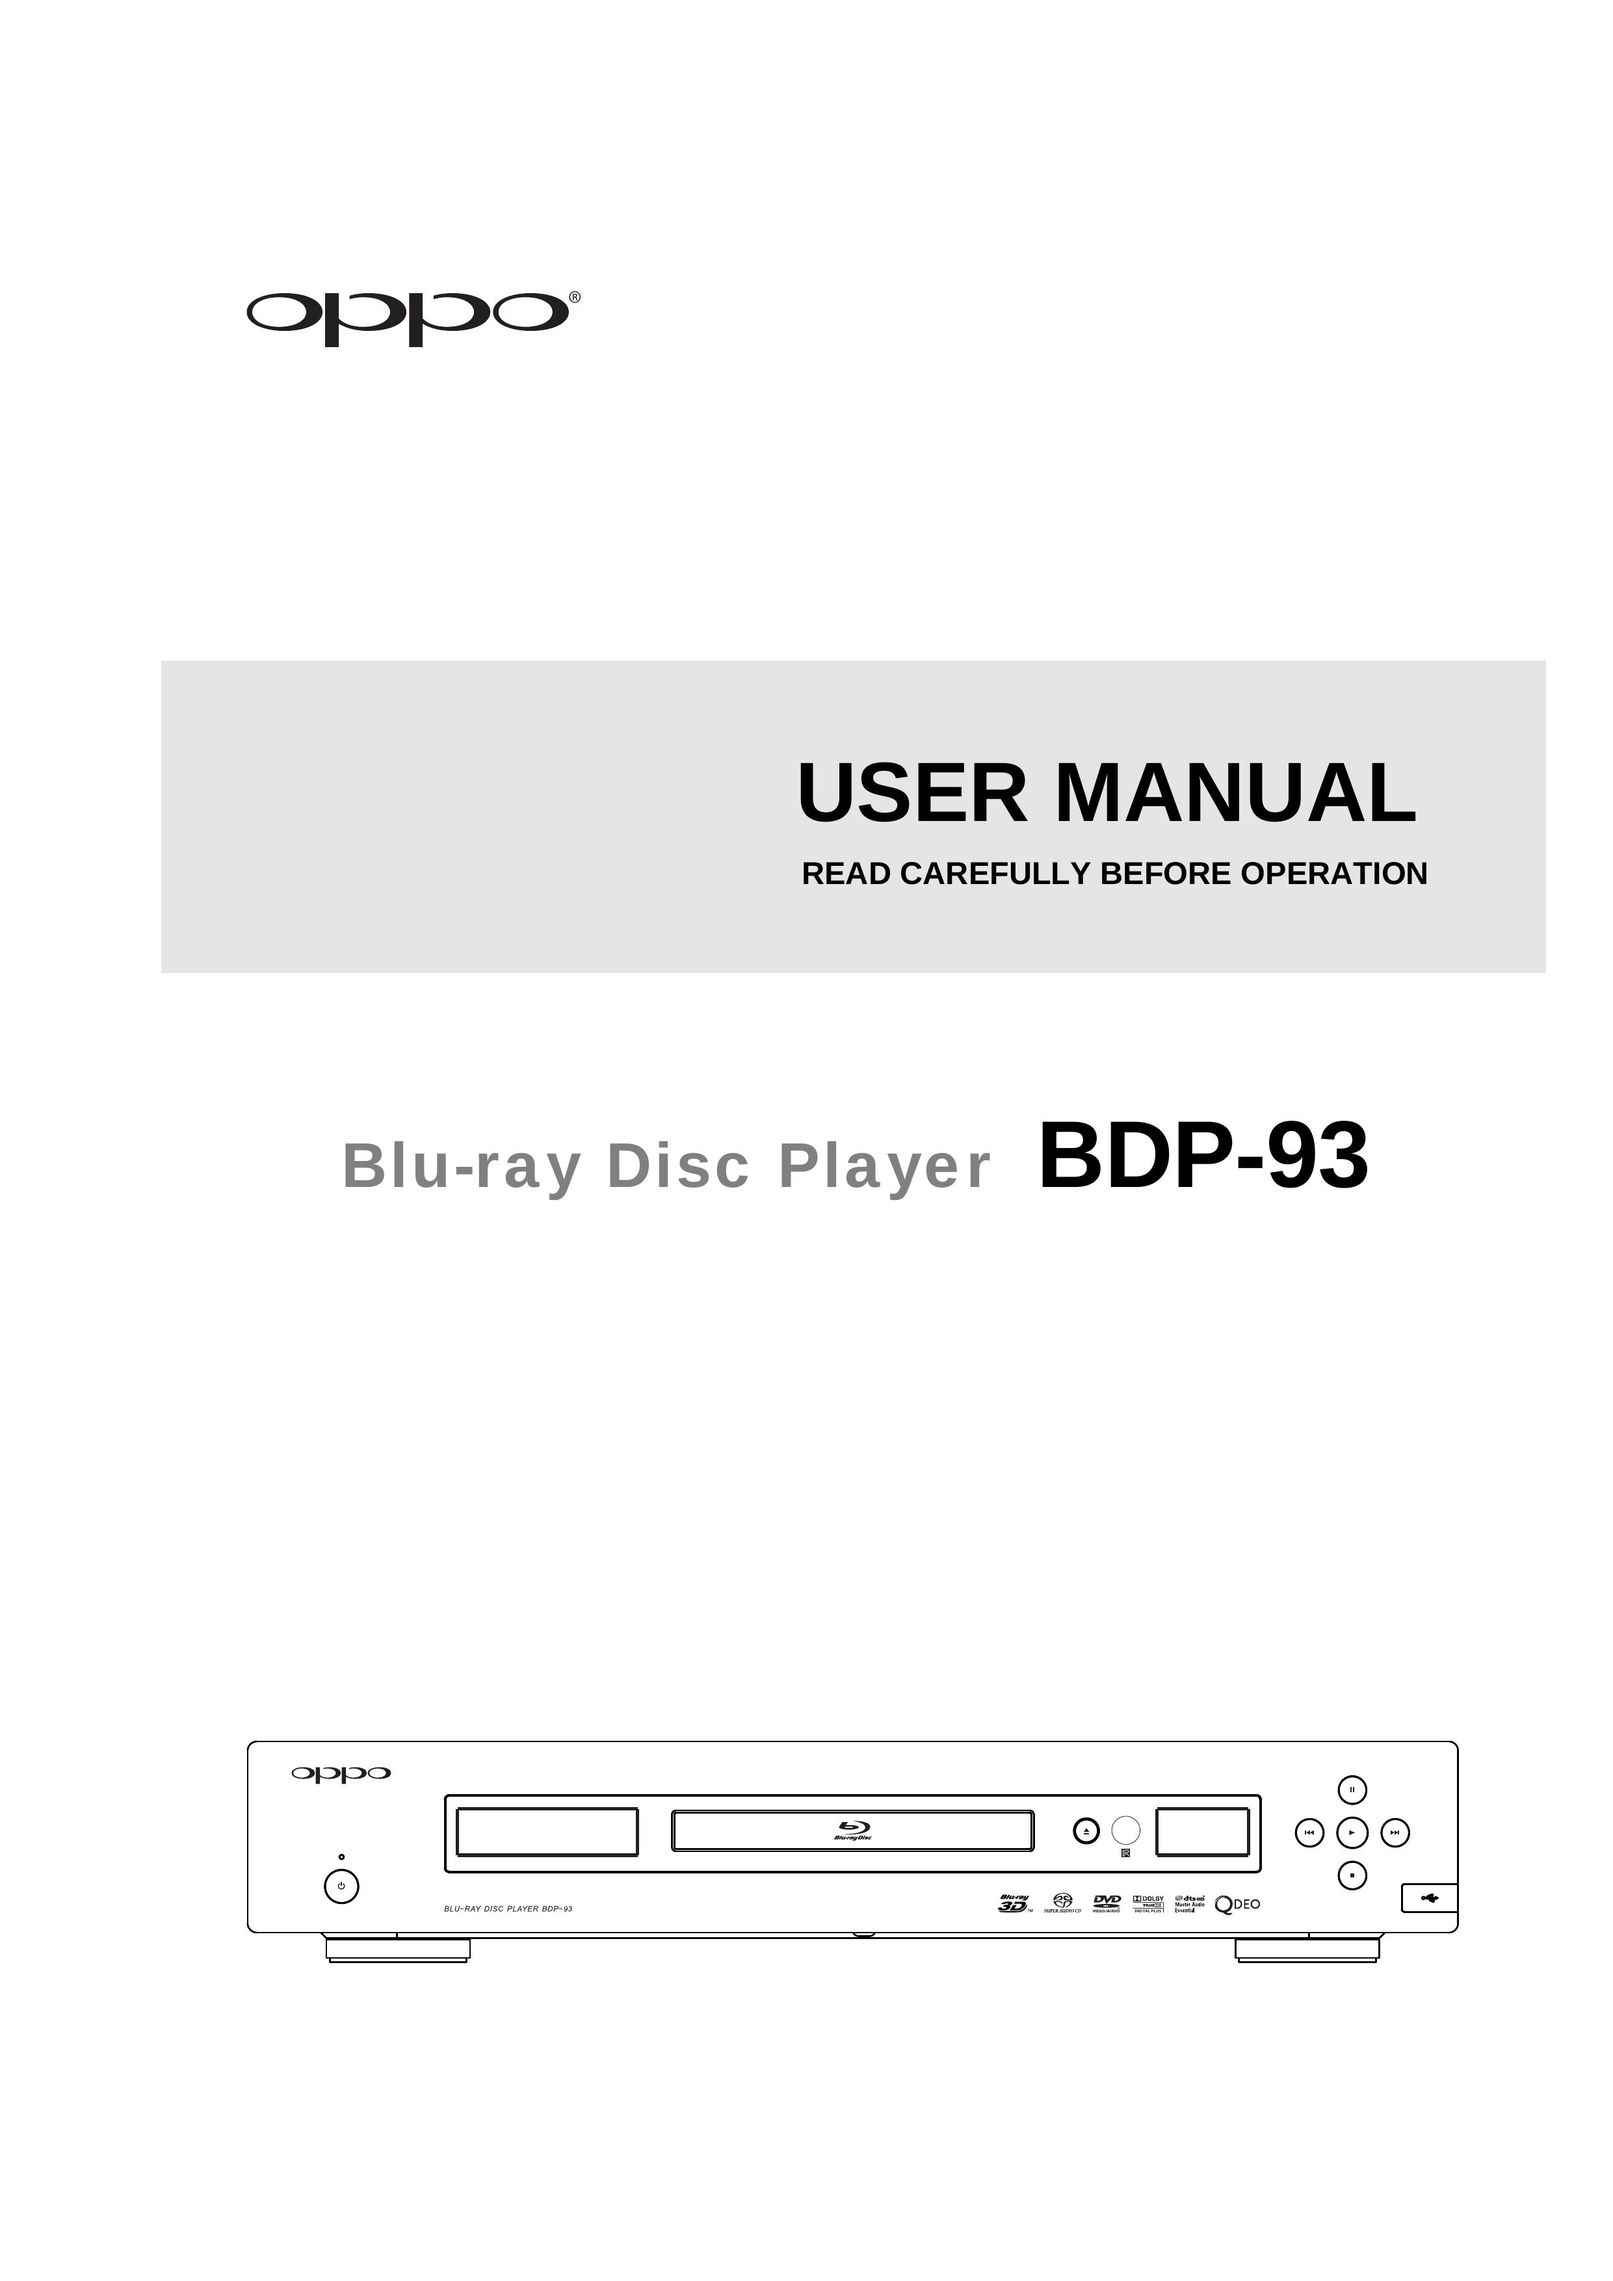 OPPO Digital BDP-93 Blu-ray Player User Manual